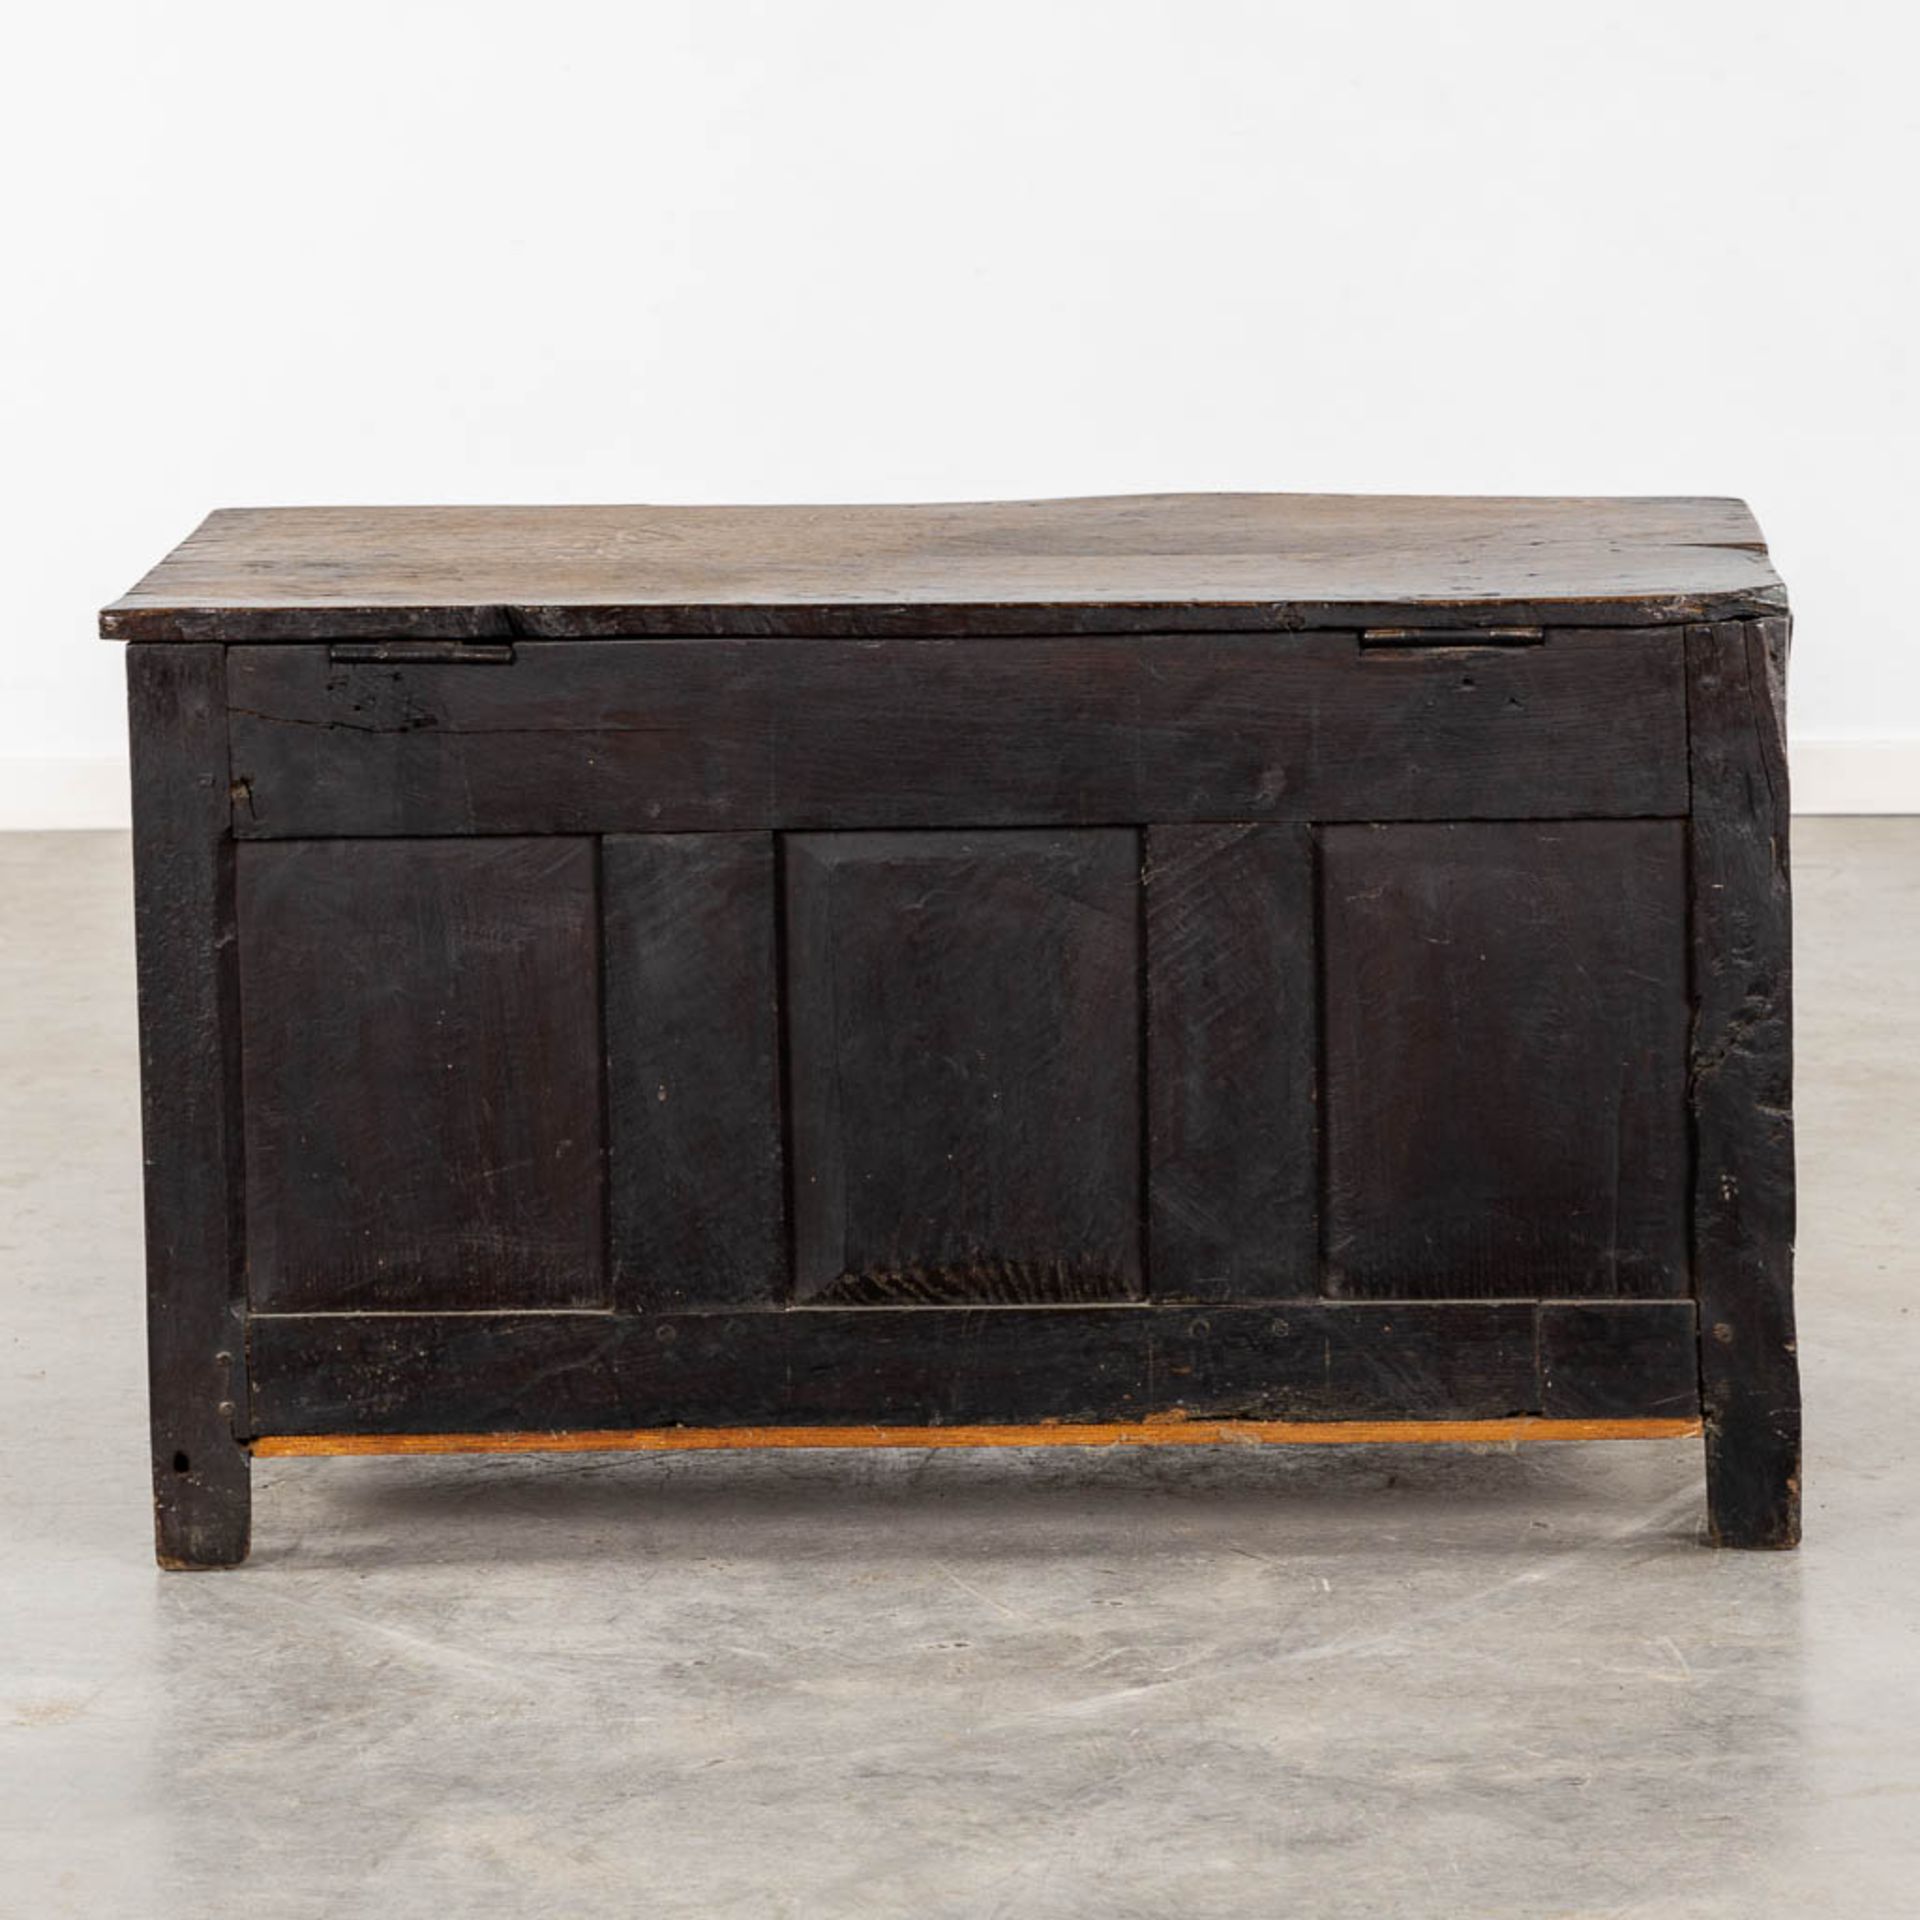 An antique wood-sculptured chest, 18th C. (L:52 x W:98 x H:56 cm) - Bild 6 aus 9